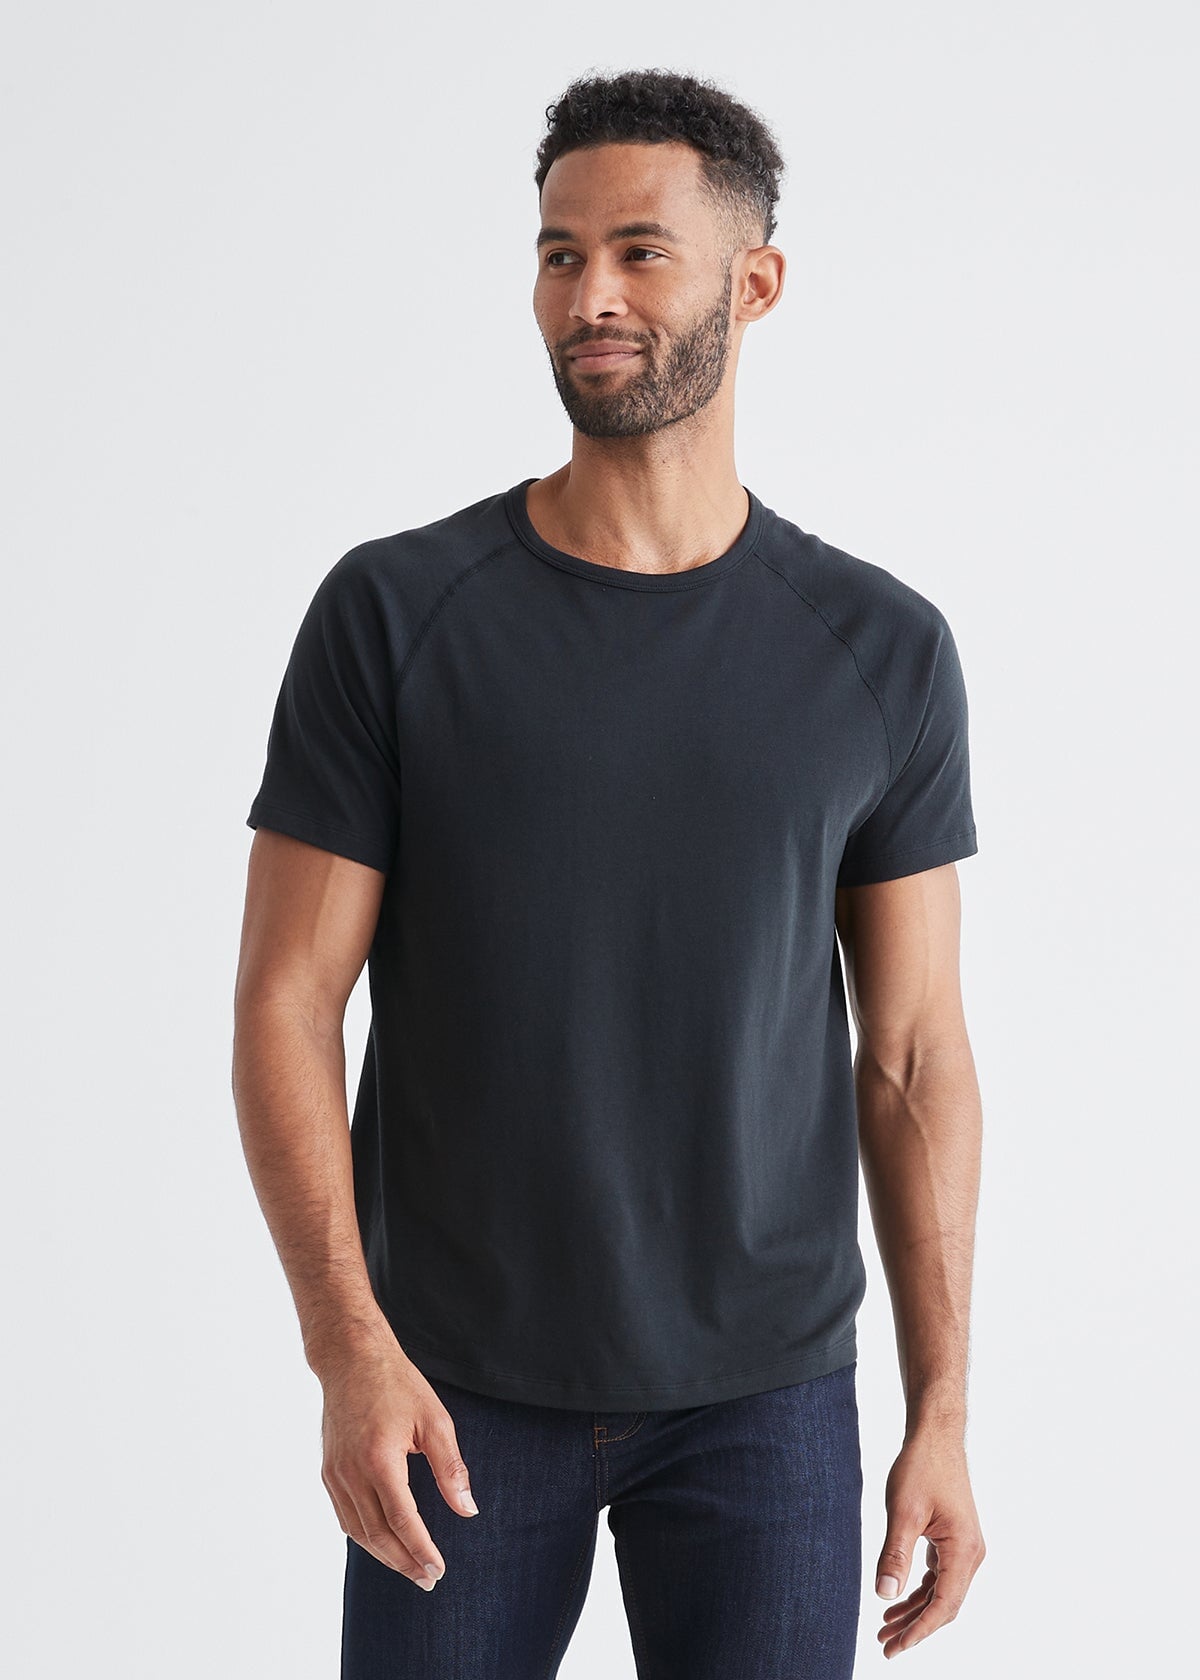 mens black soft midweight t-shirt front